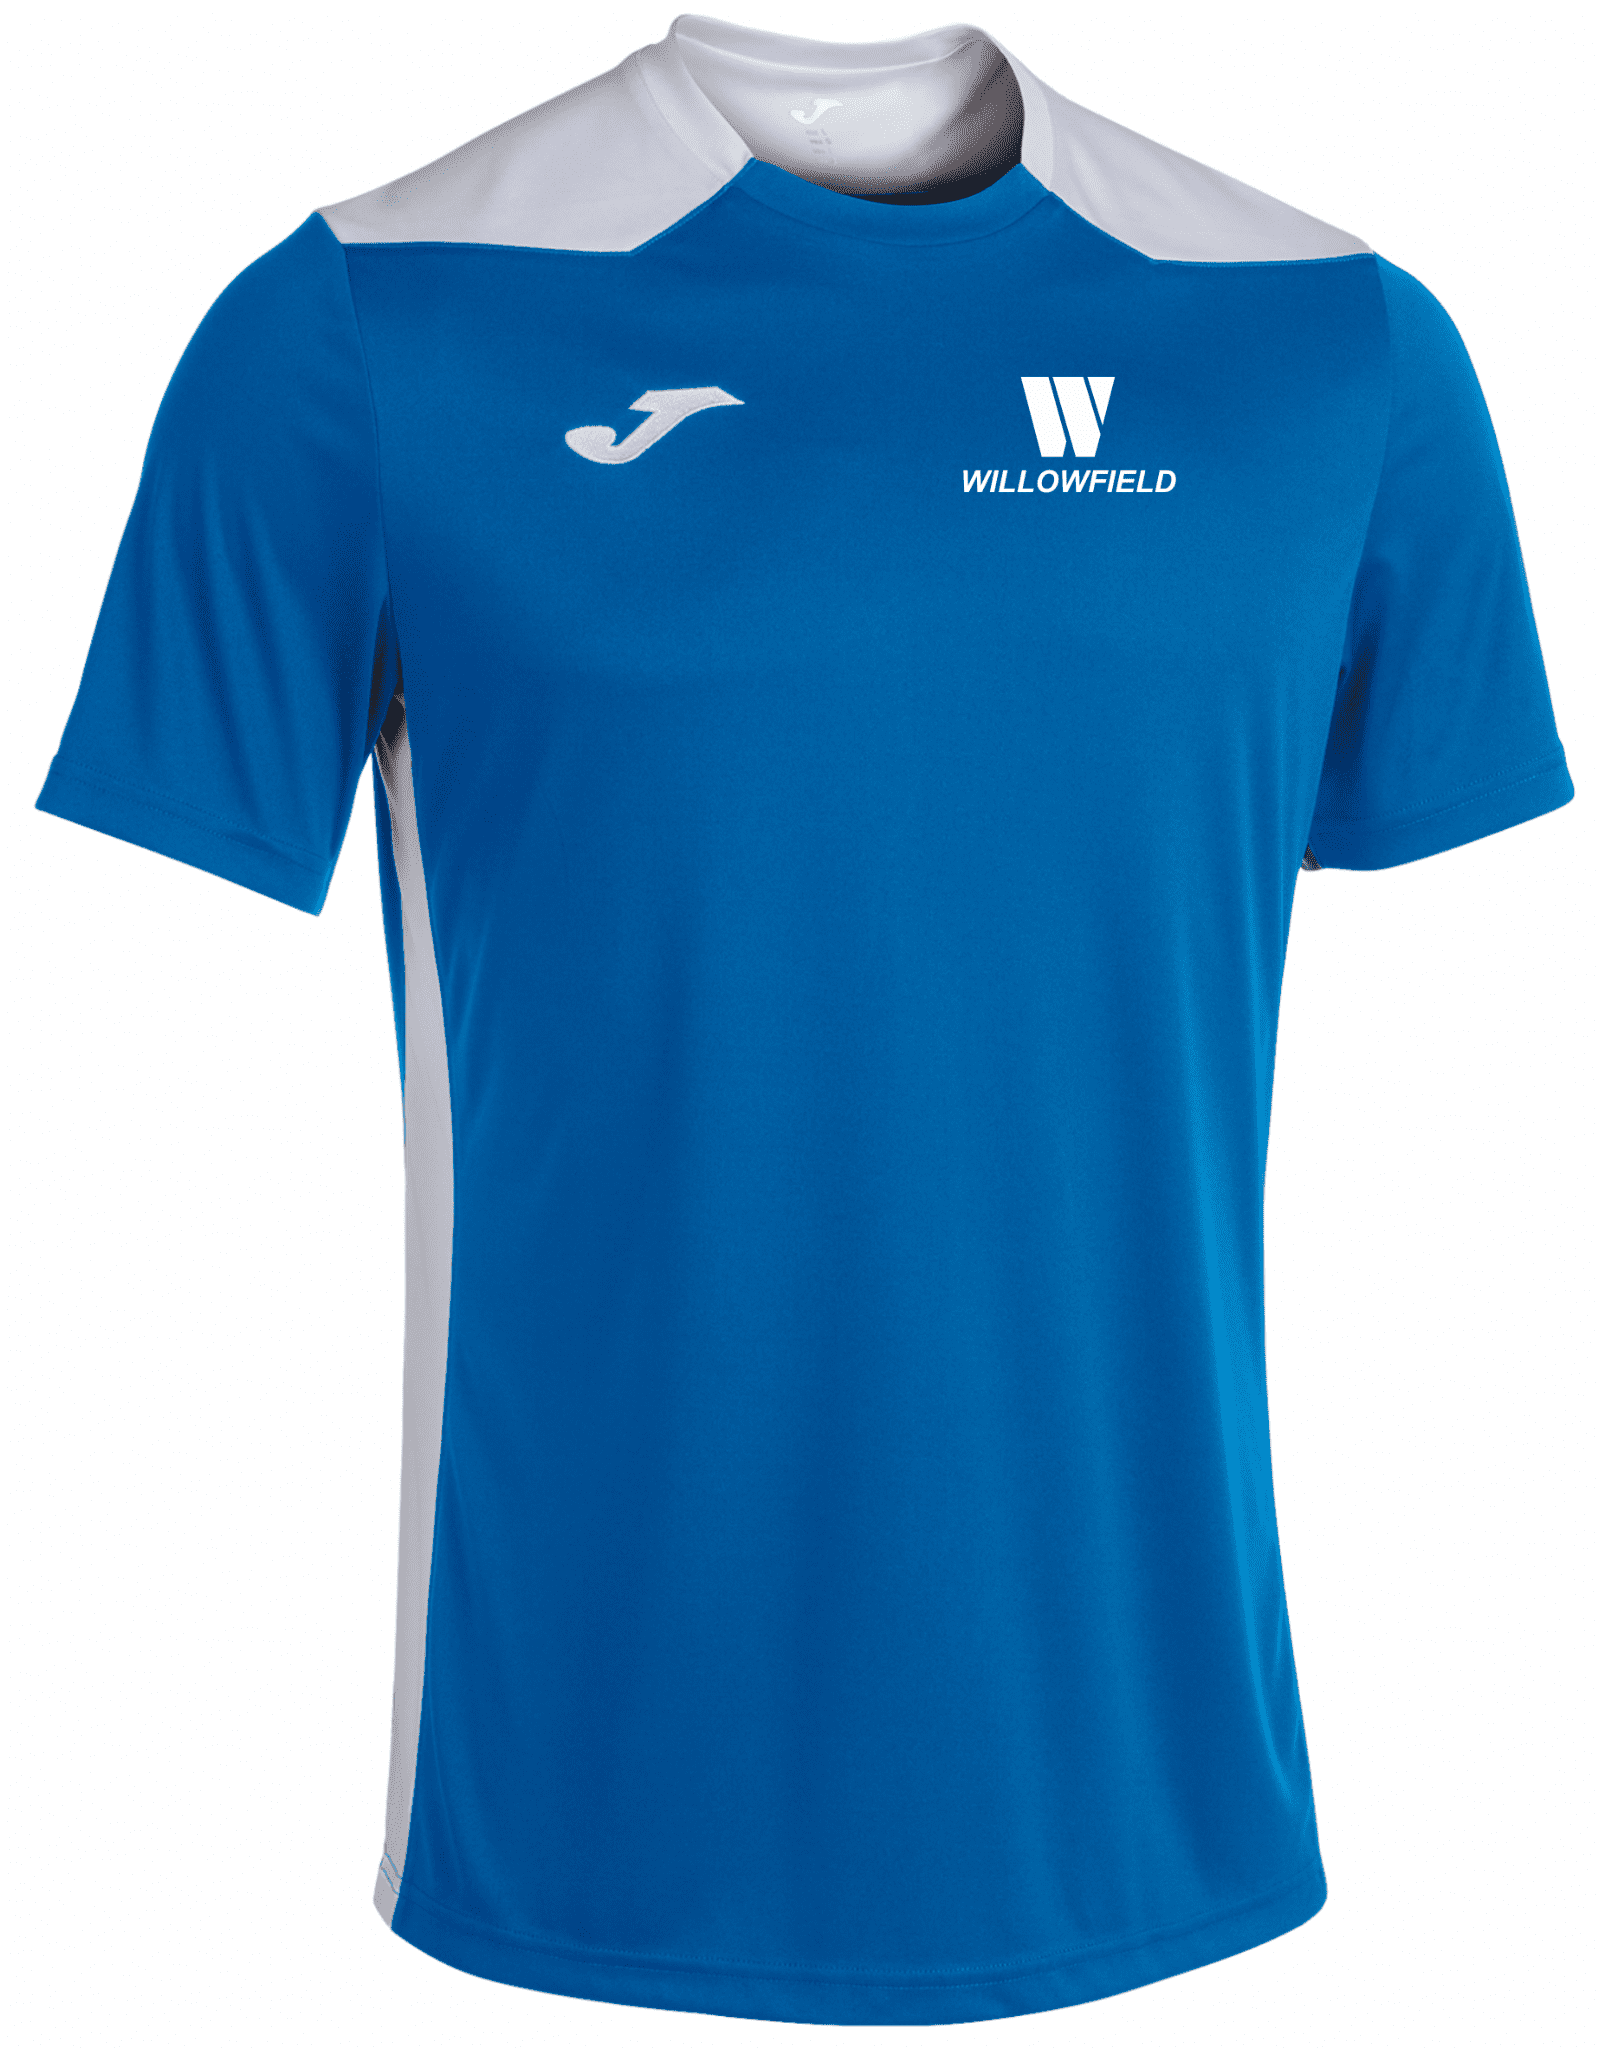 Willowfield Harriers Championship 6 Mens Tee Shirt Blue/White